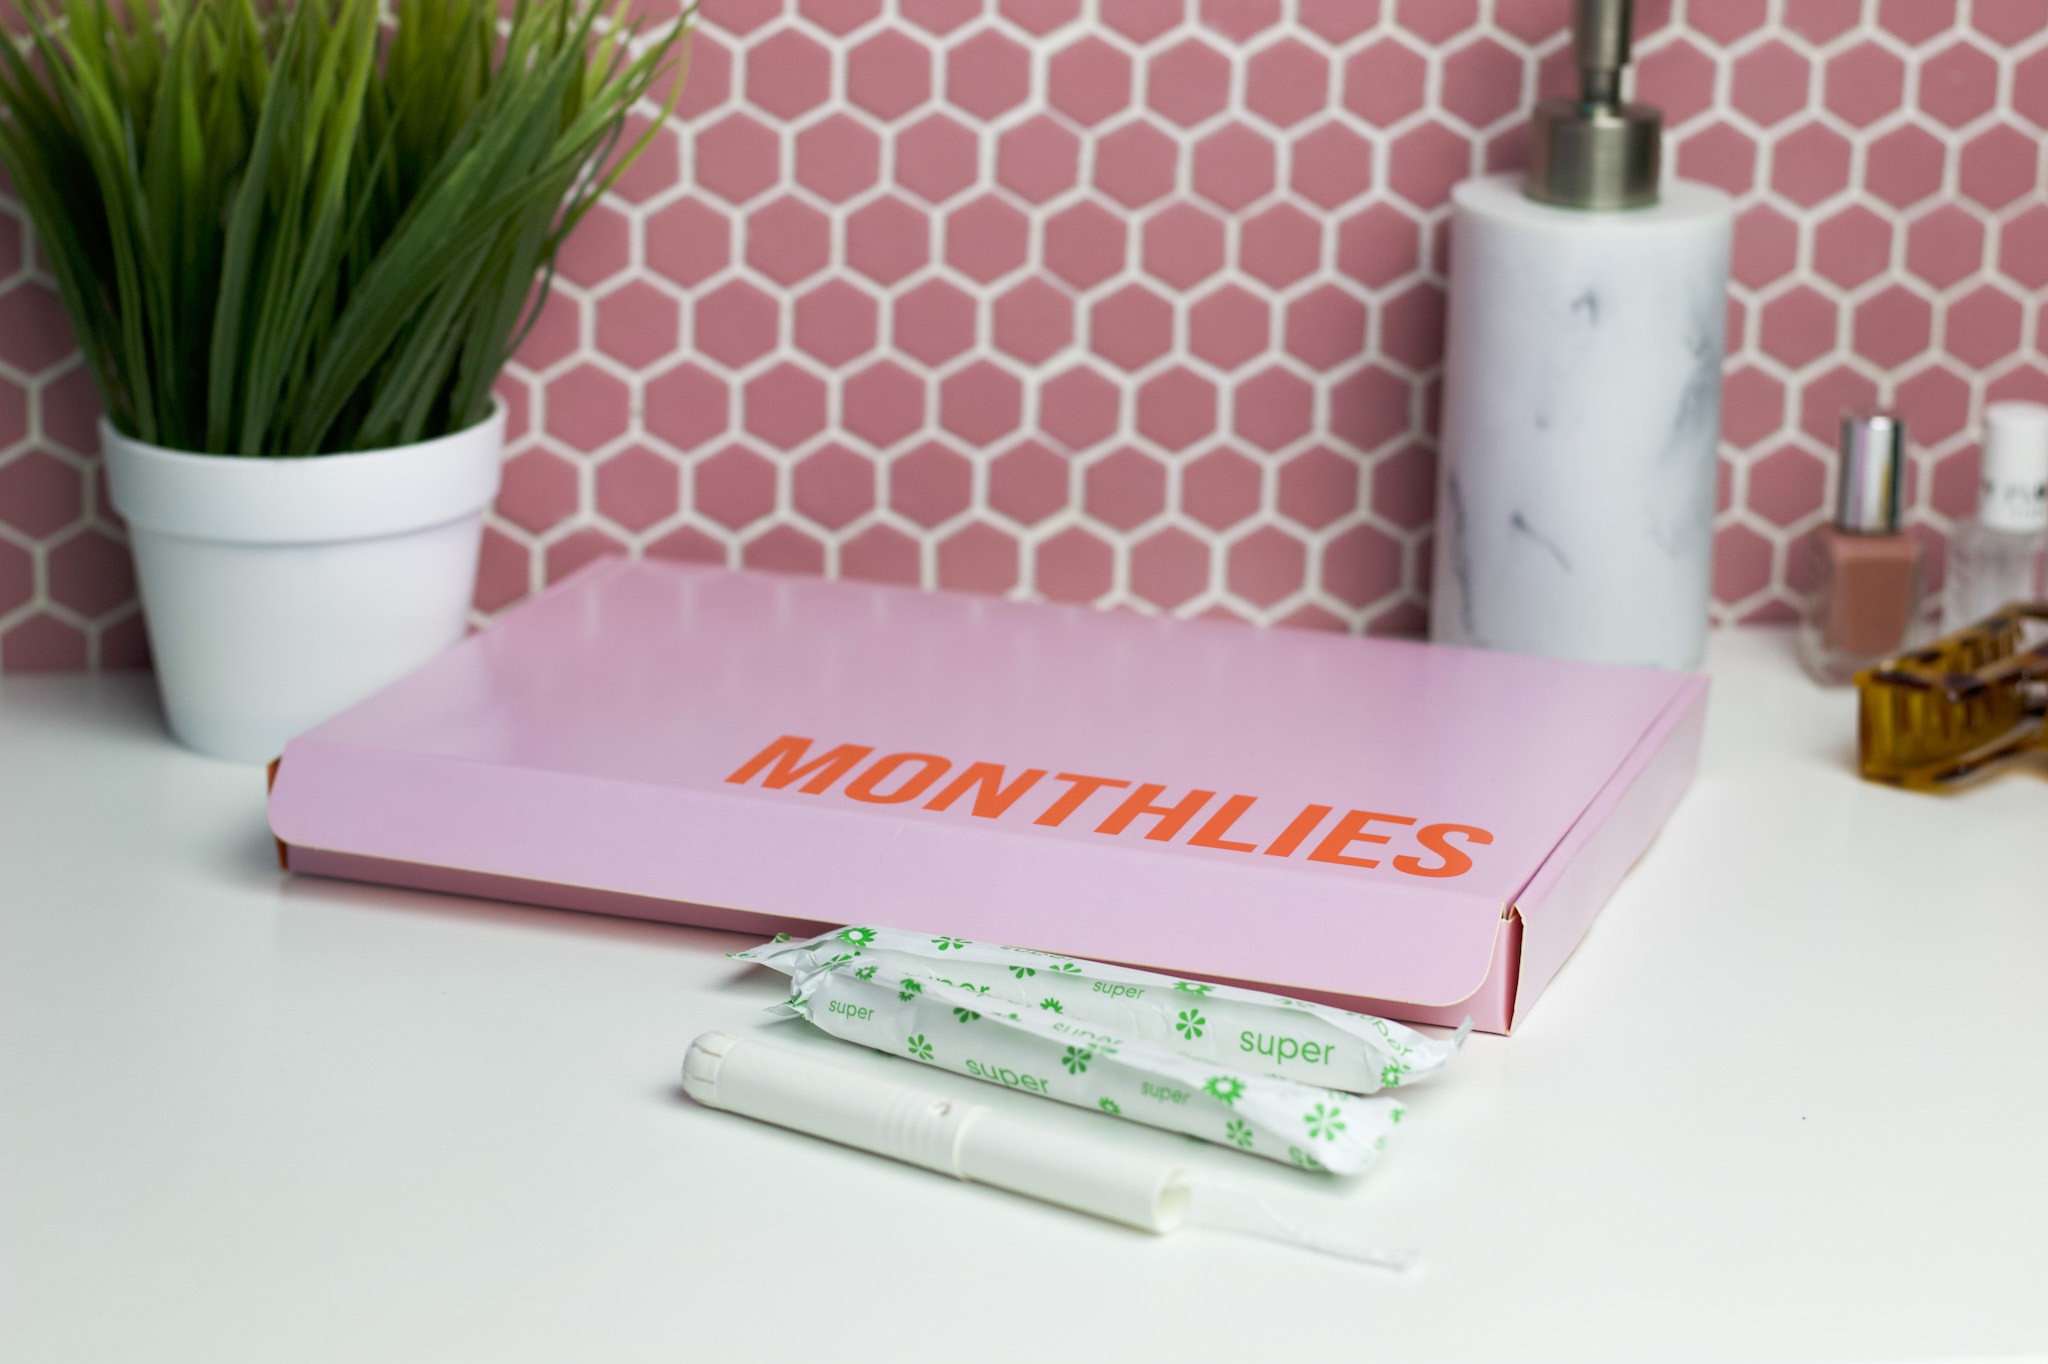 Monthlies - Ireland's newest period subscription box